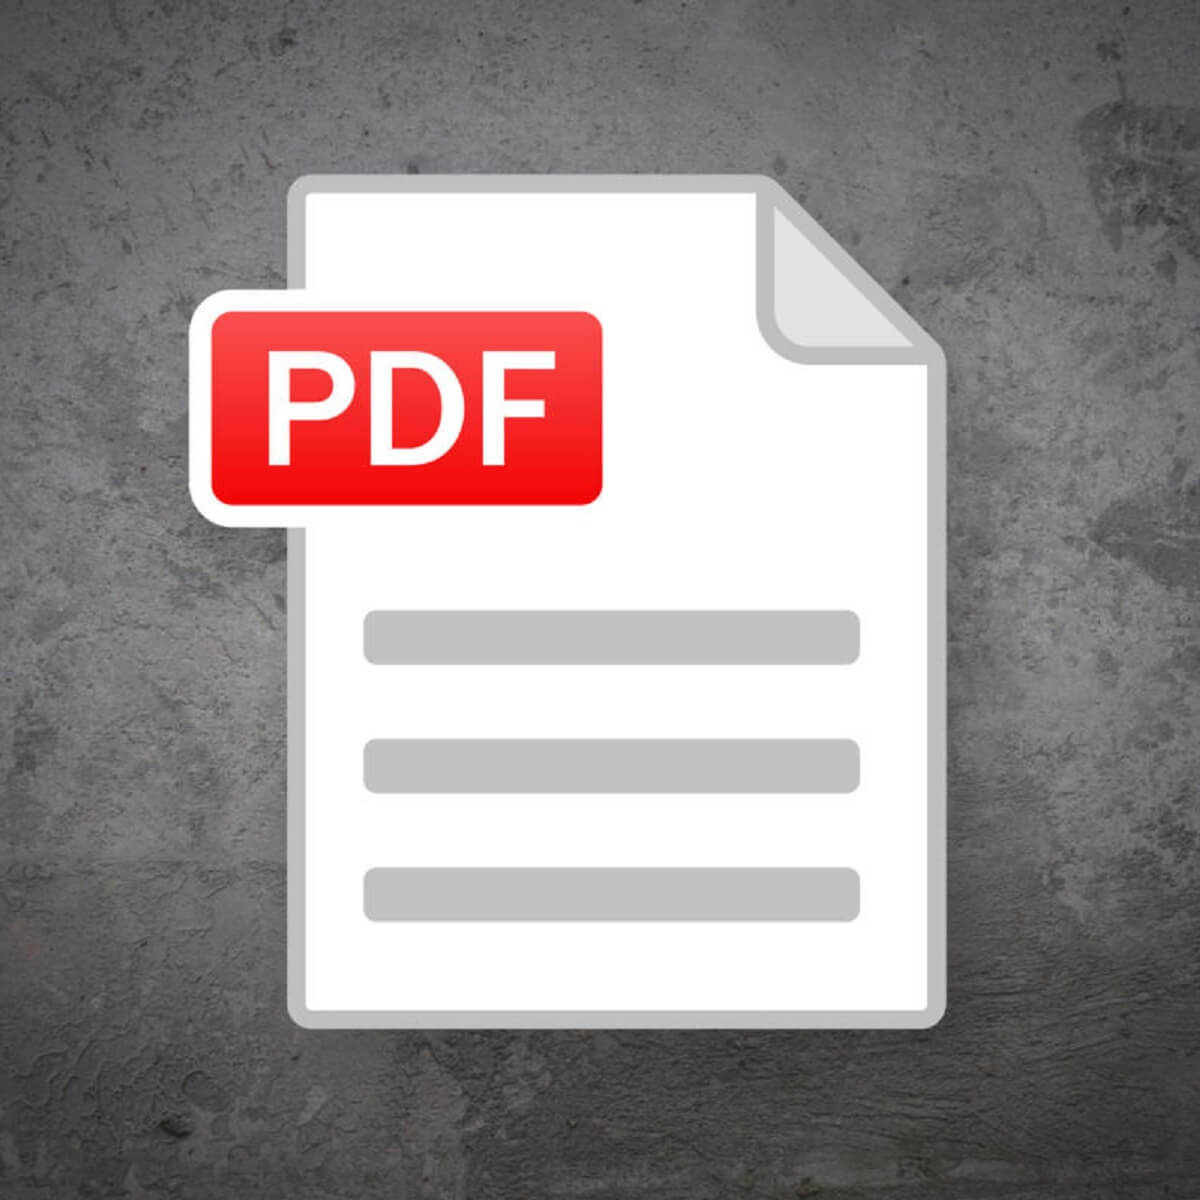 How to fix Printer error PDF